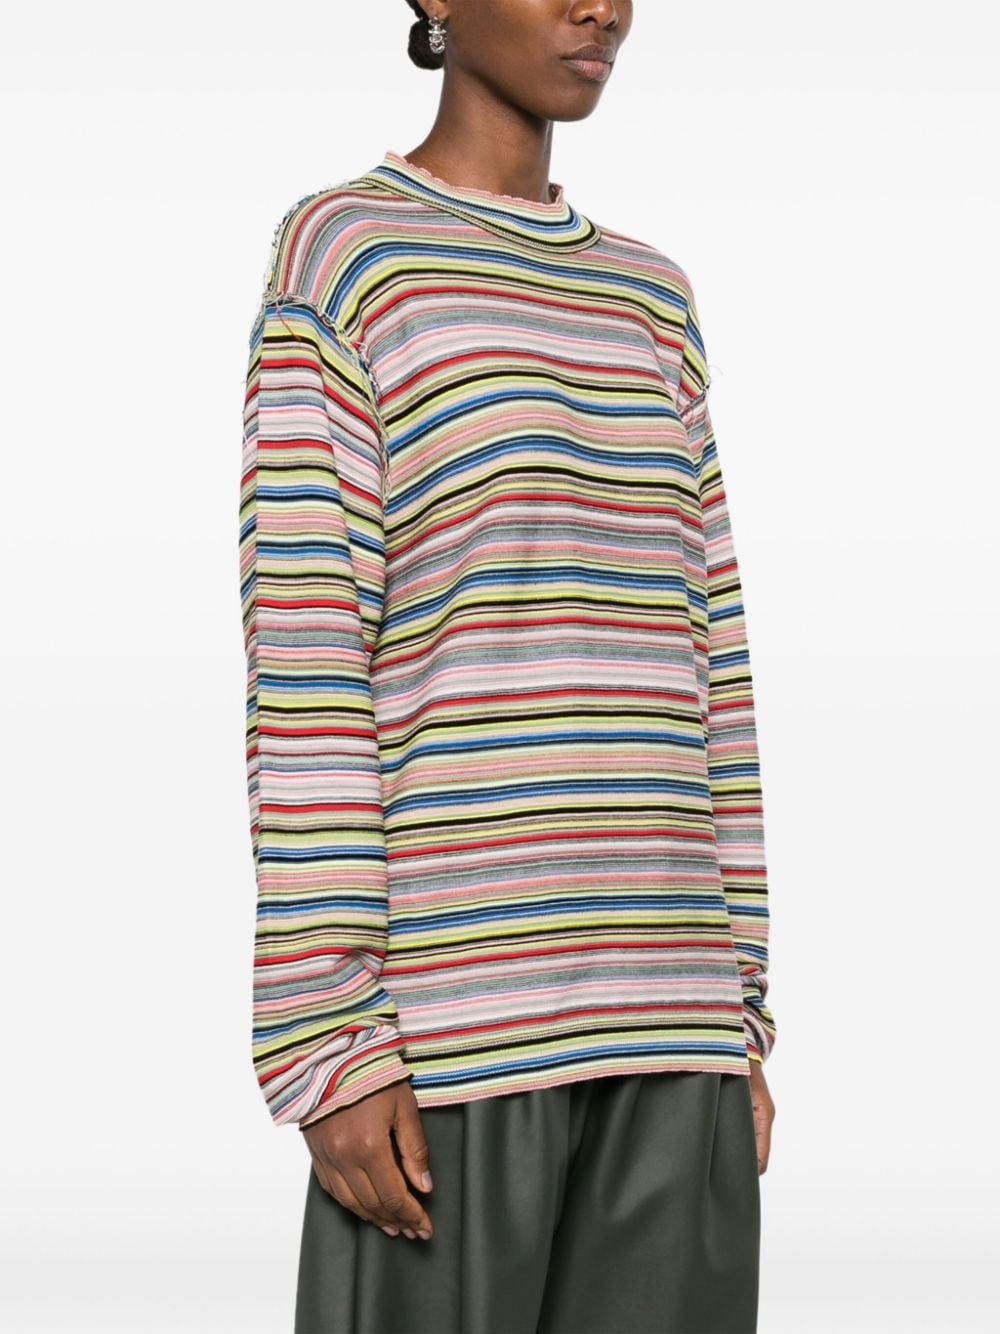 inside-out striped jumper - 3